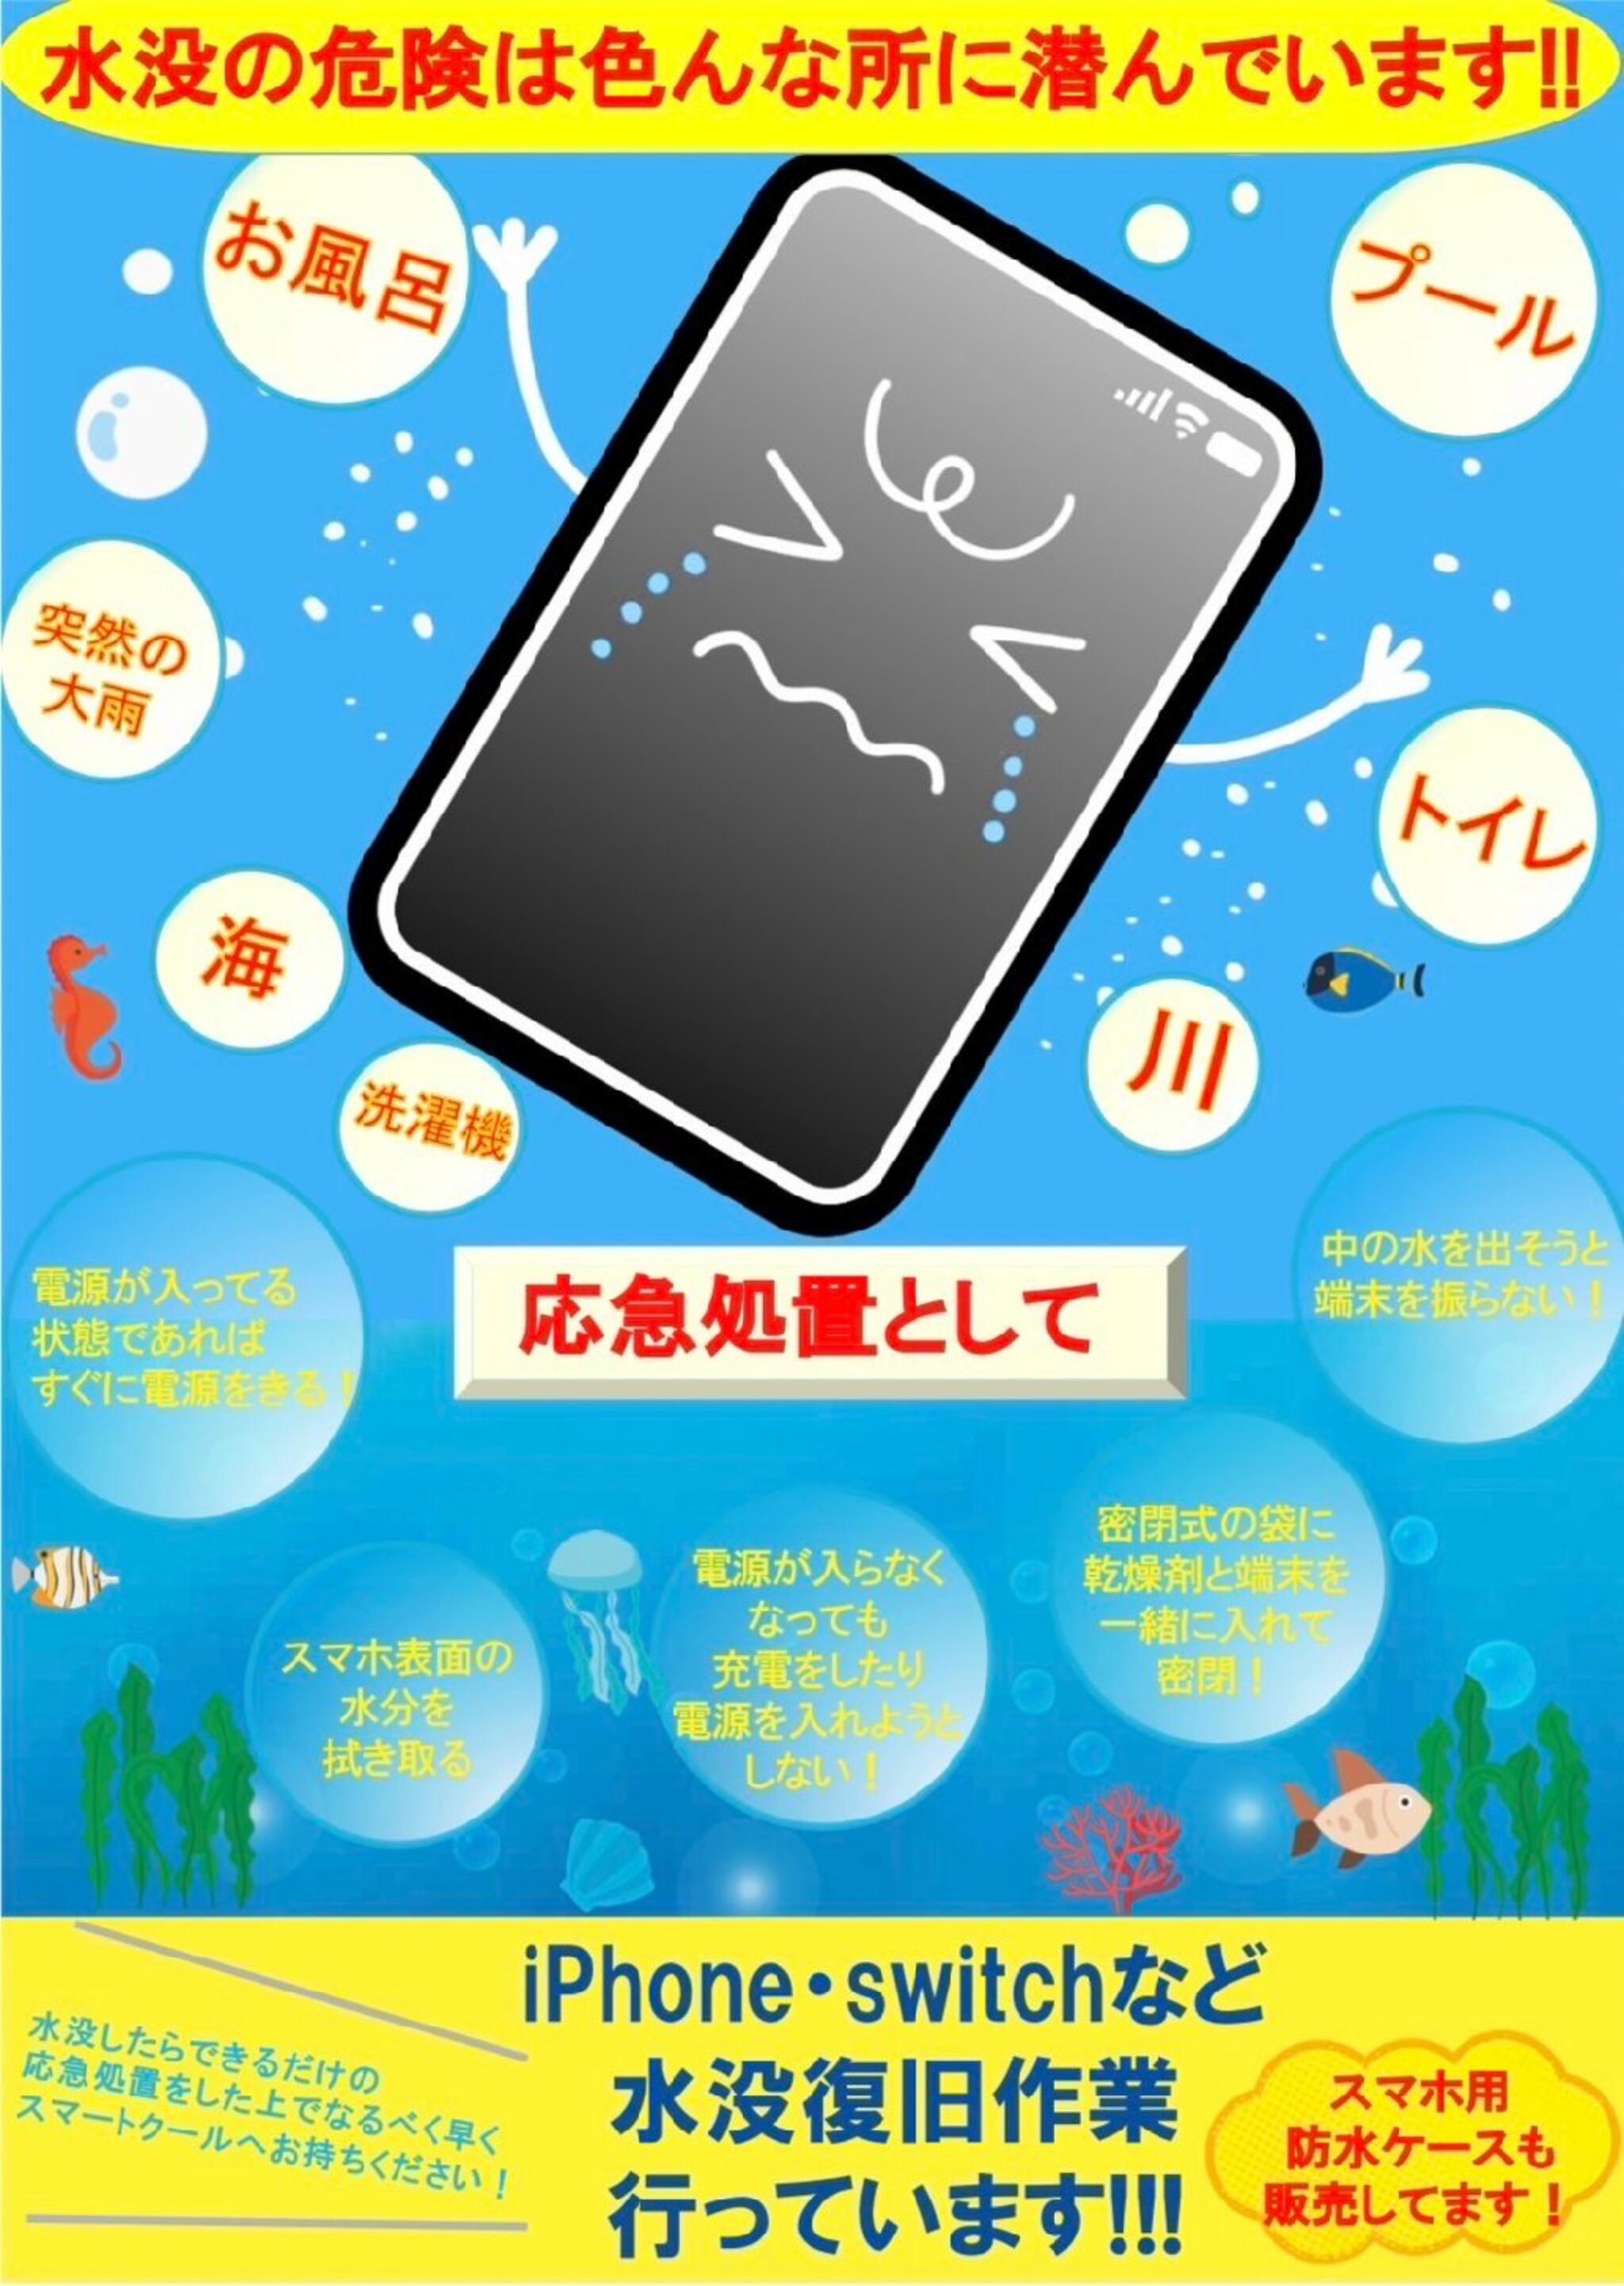 iPhone・iPad・Switch修理店 スマートクール イオンモール広島祇園店からのお知らせ(雨の日 は、外でのiPhoneの使用には要注意！！)に関する写真